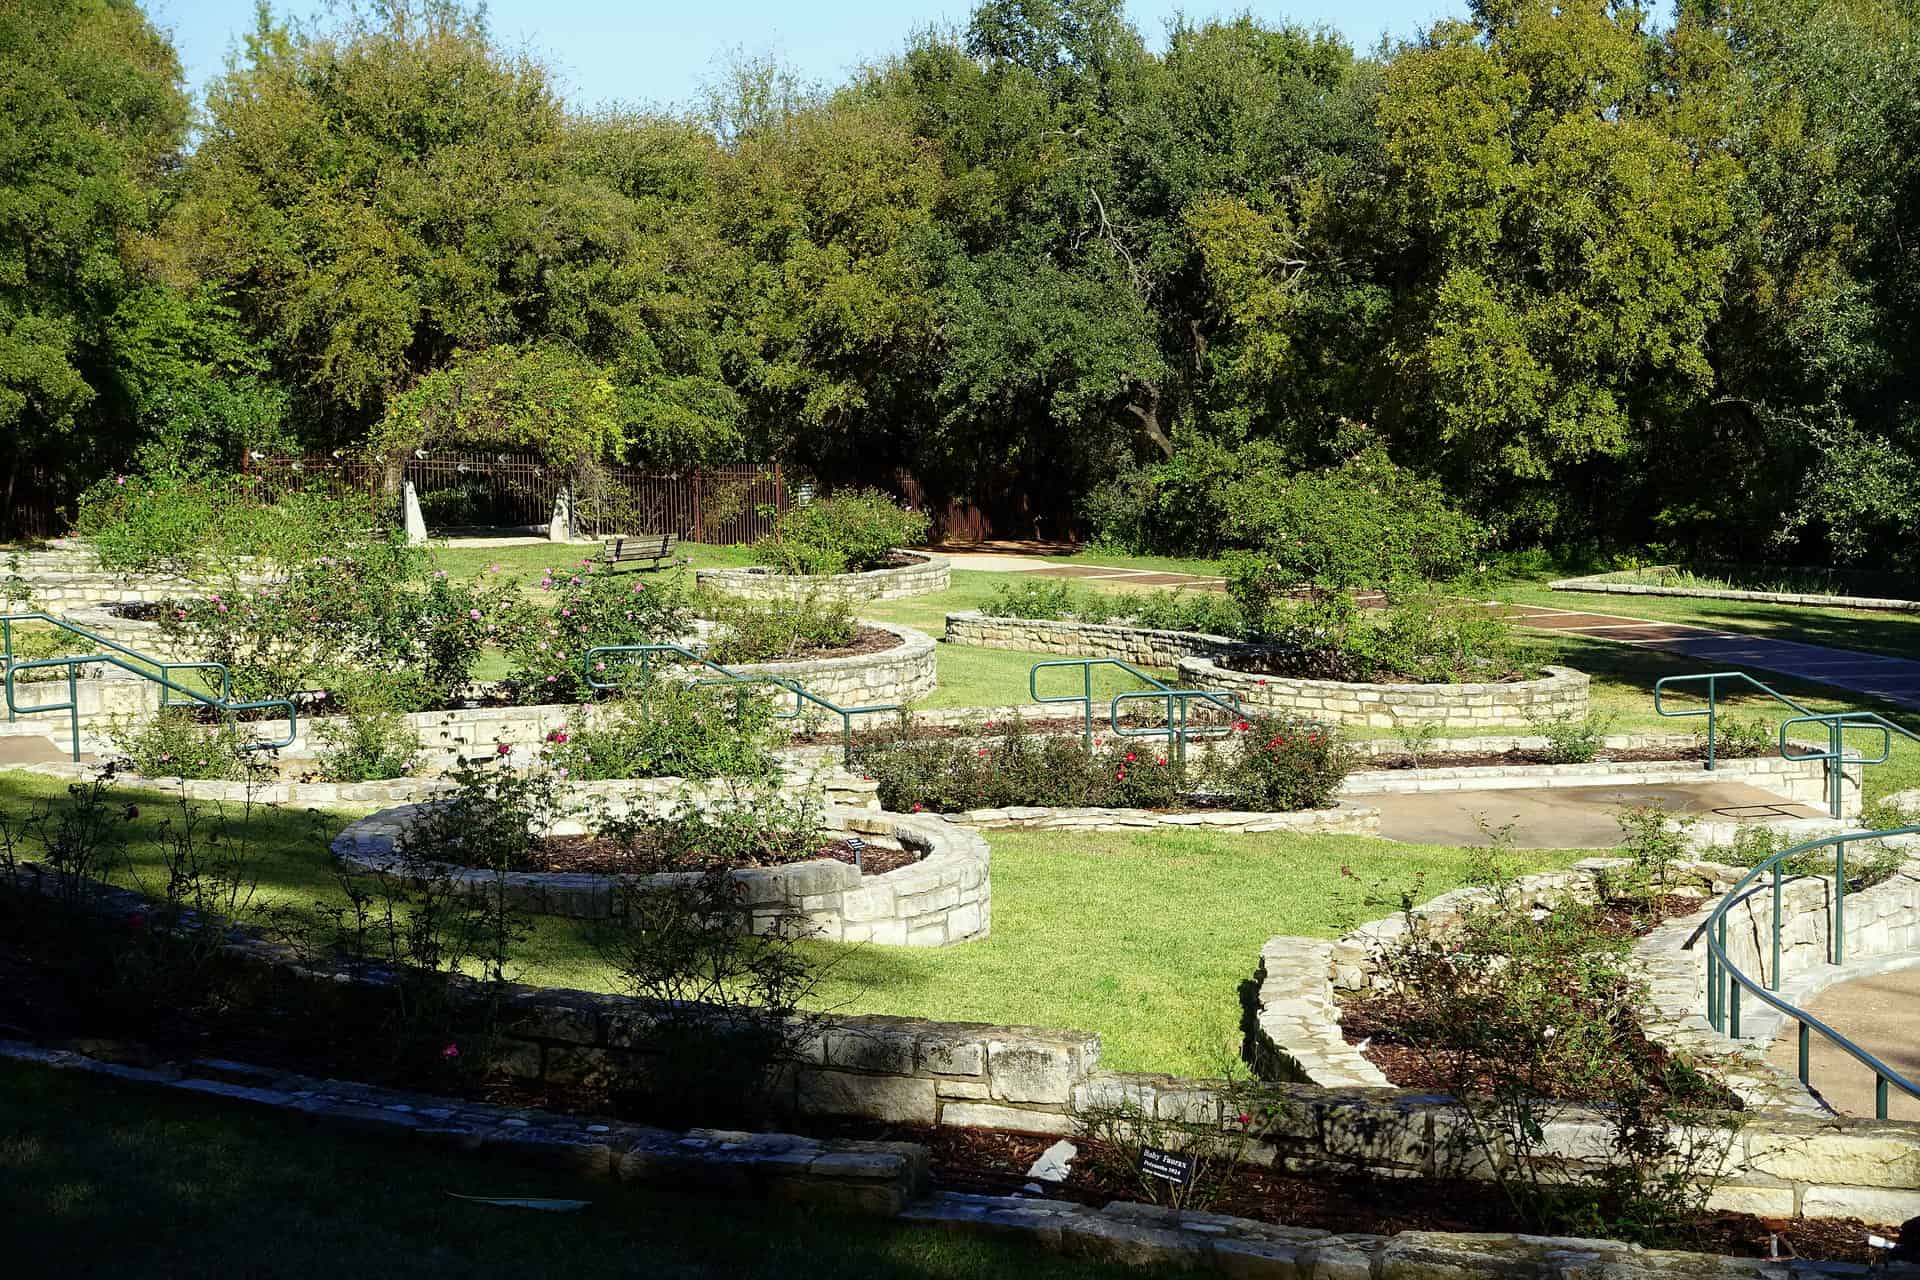 The Mabel Davis Rose Garden